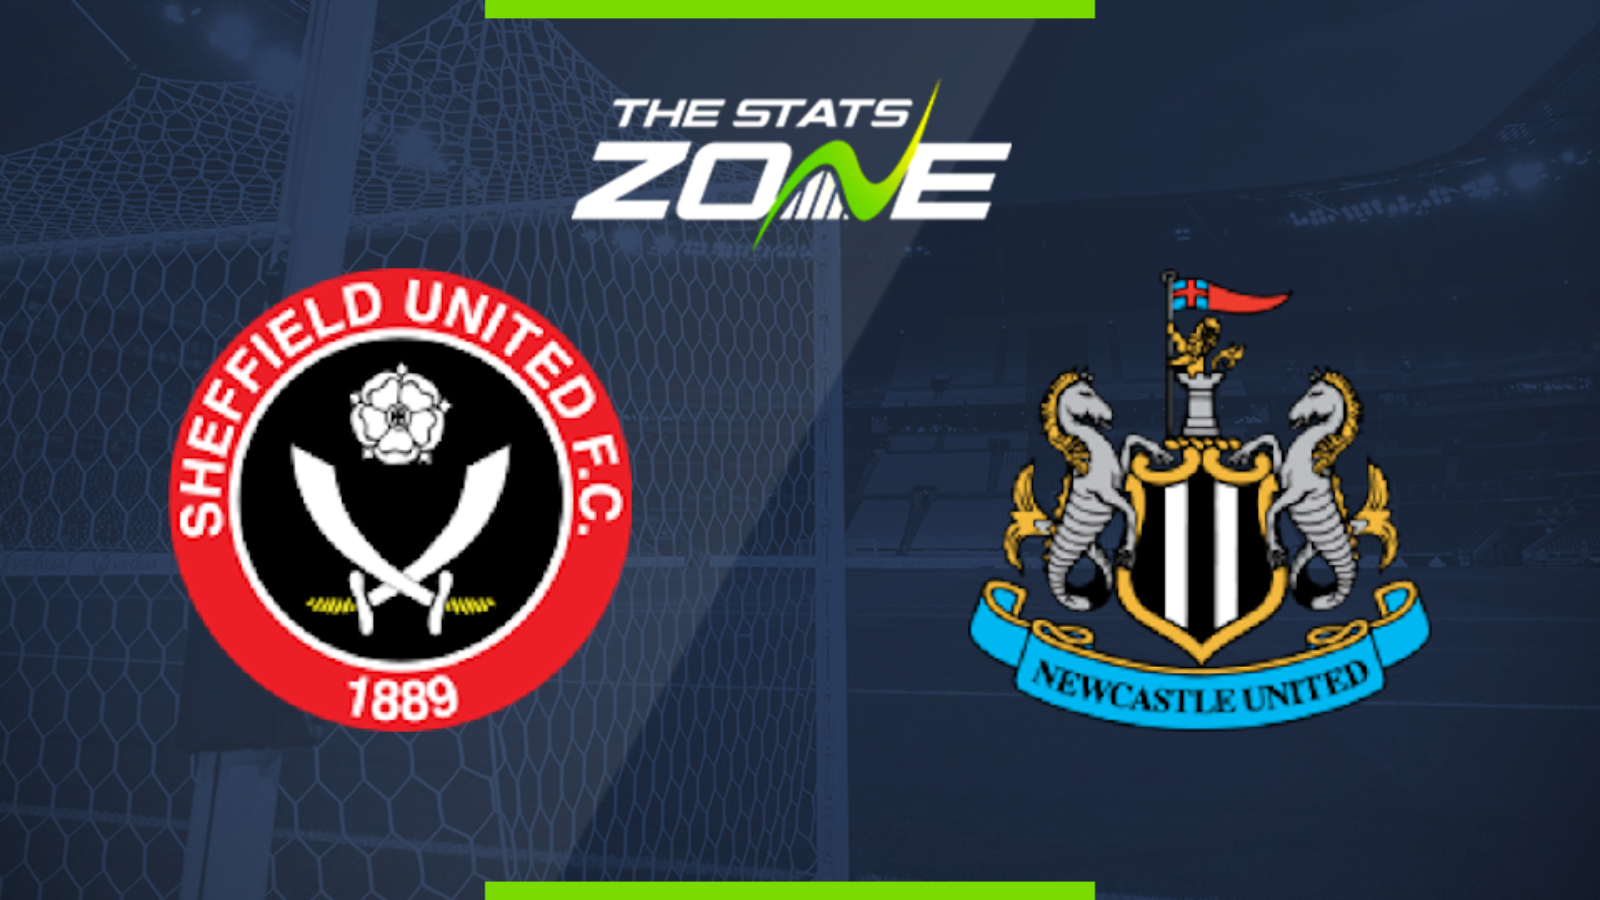 Newcastle vs sheffield united